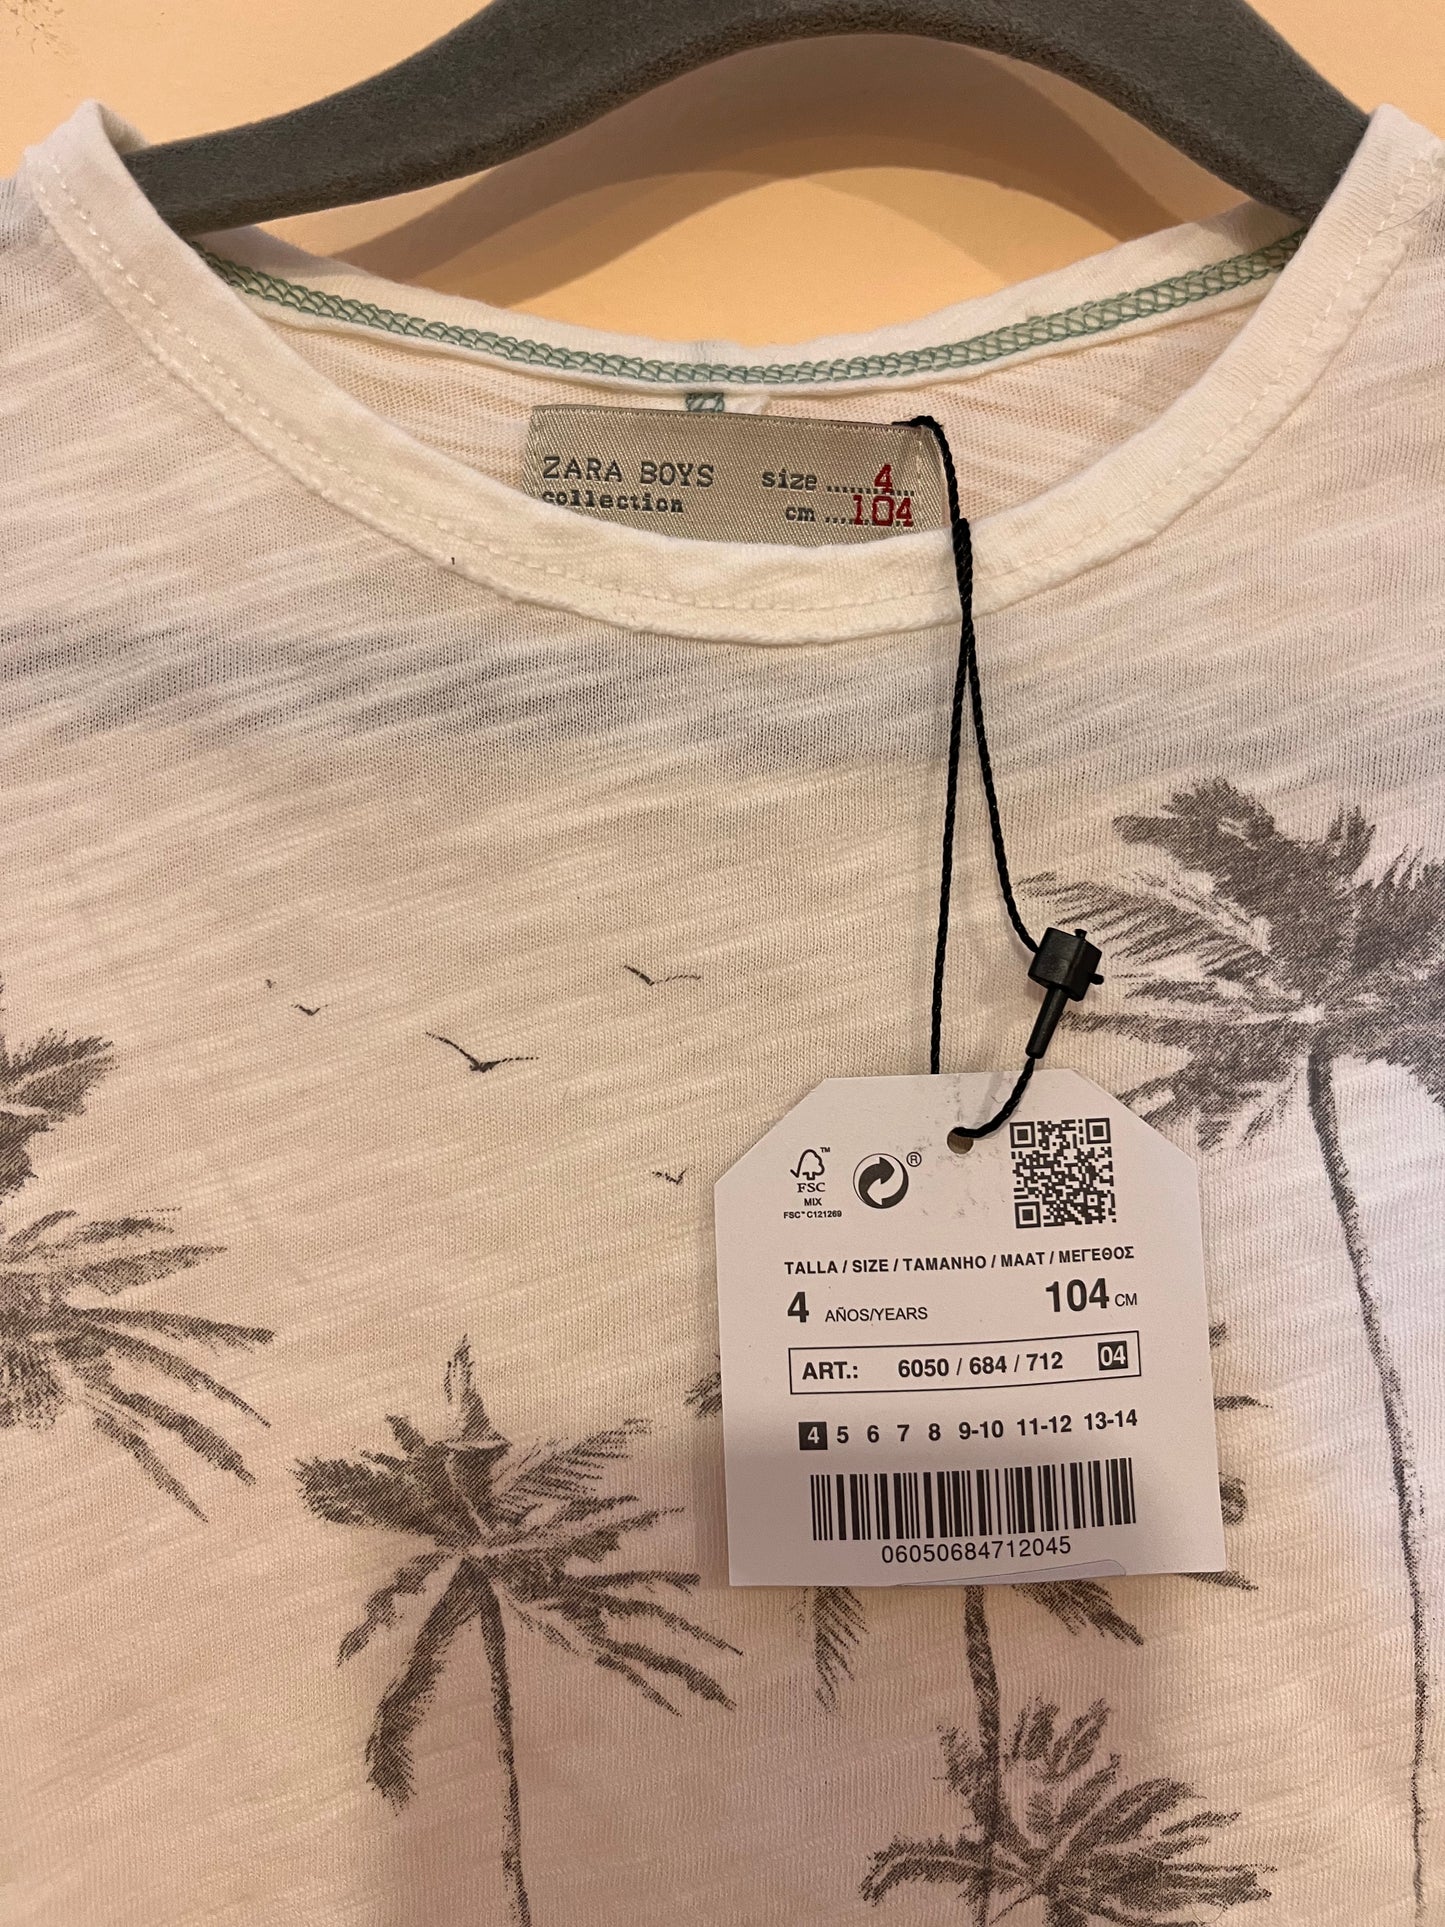 NEW! Zara “Los Angeles” T-Shirt (4T)